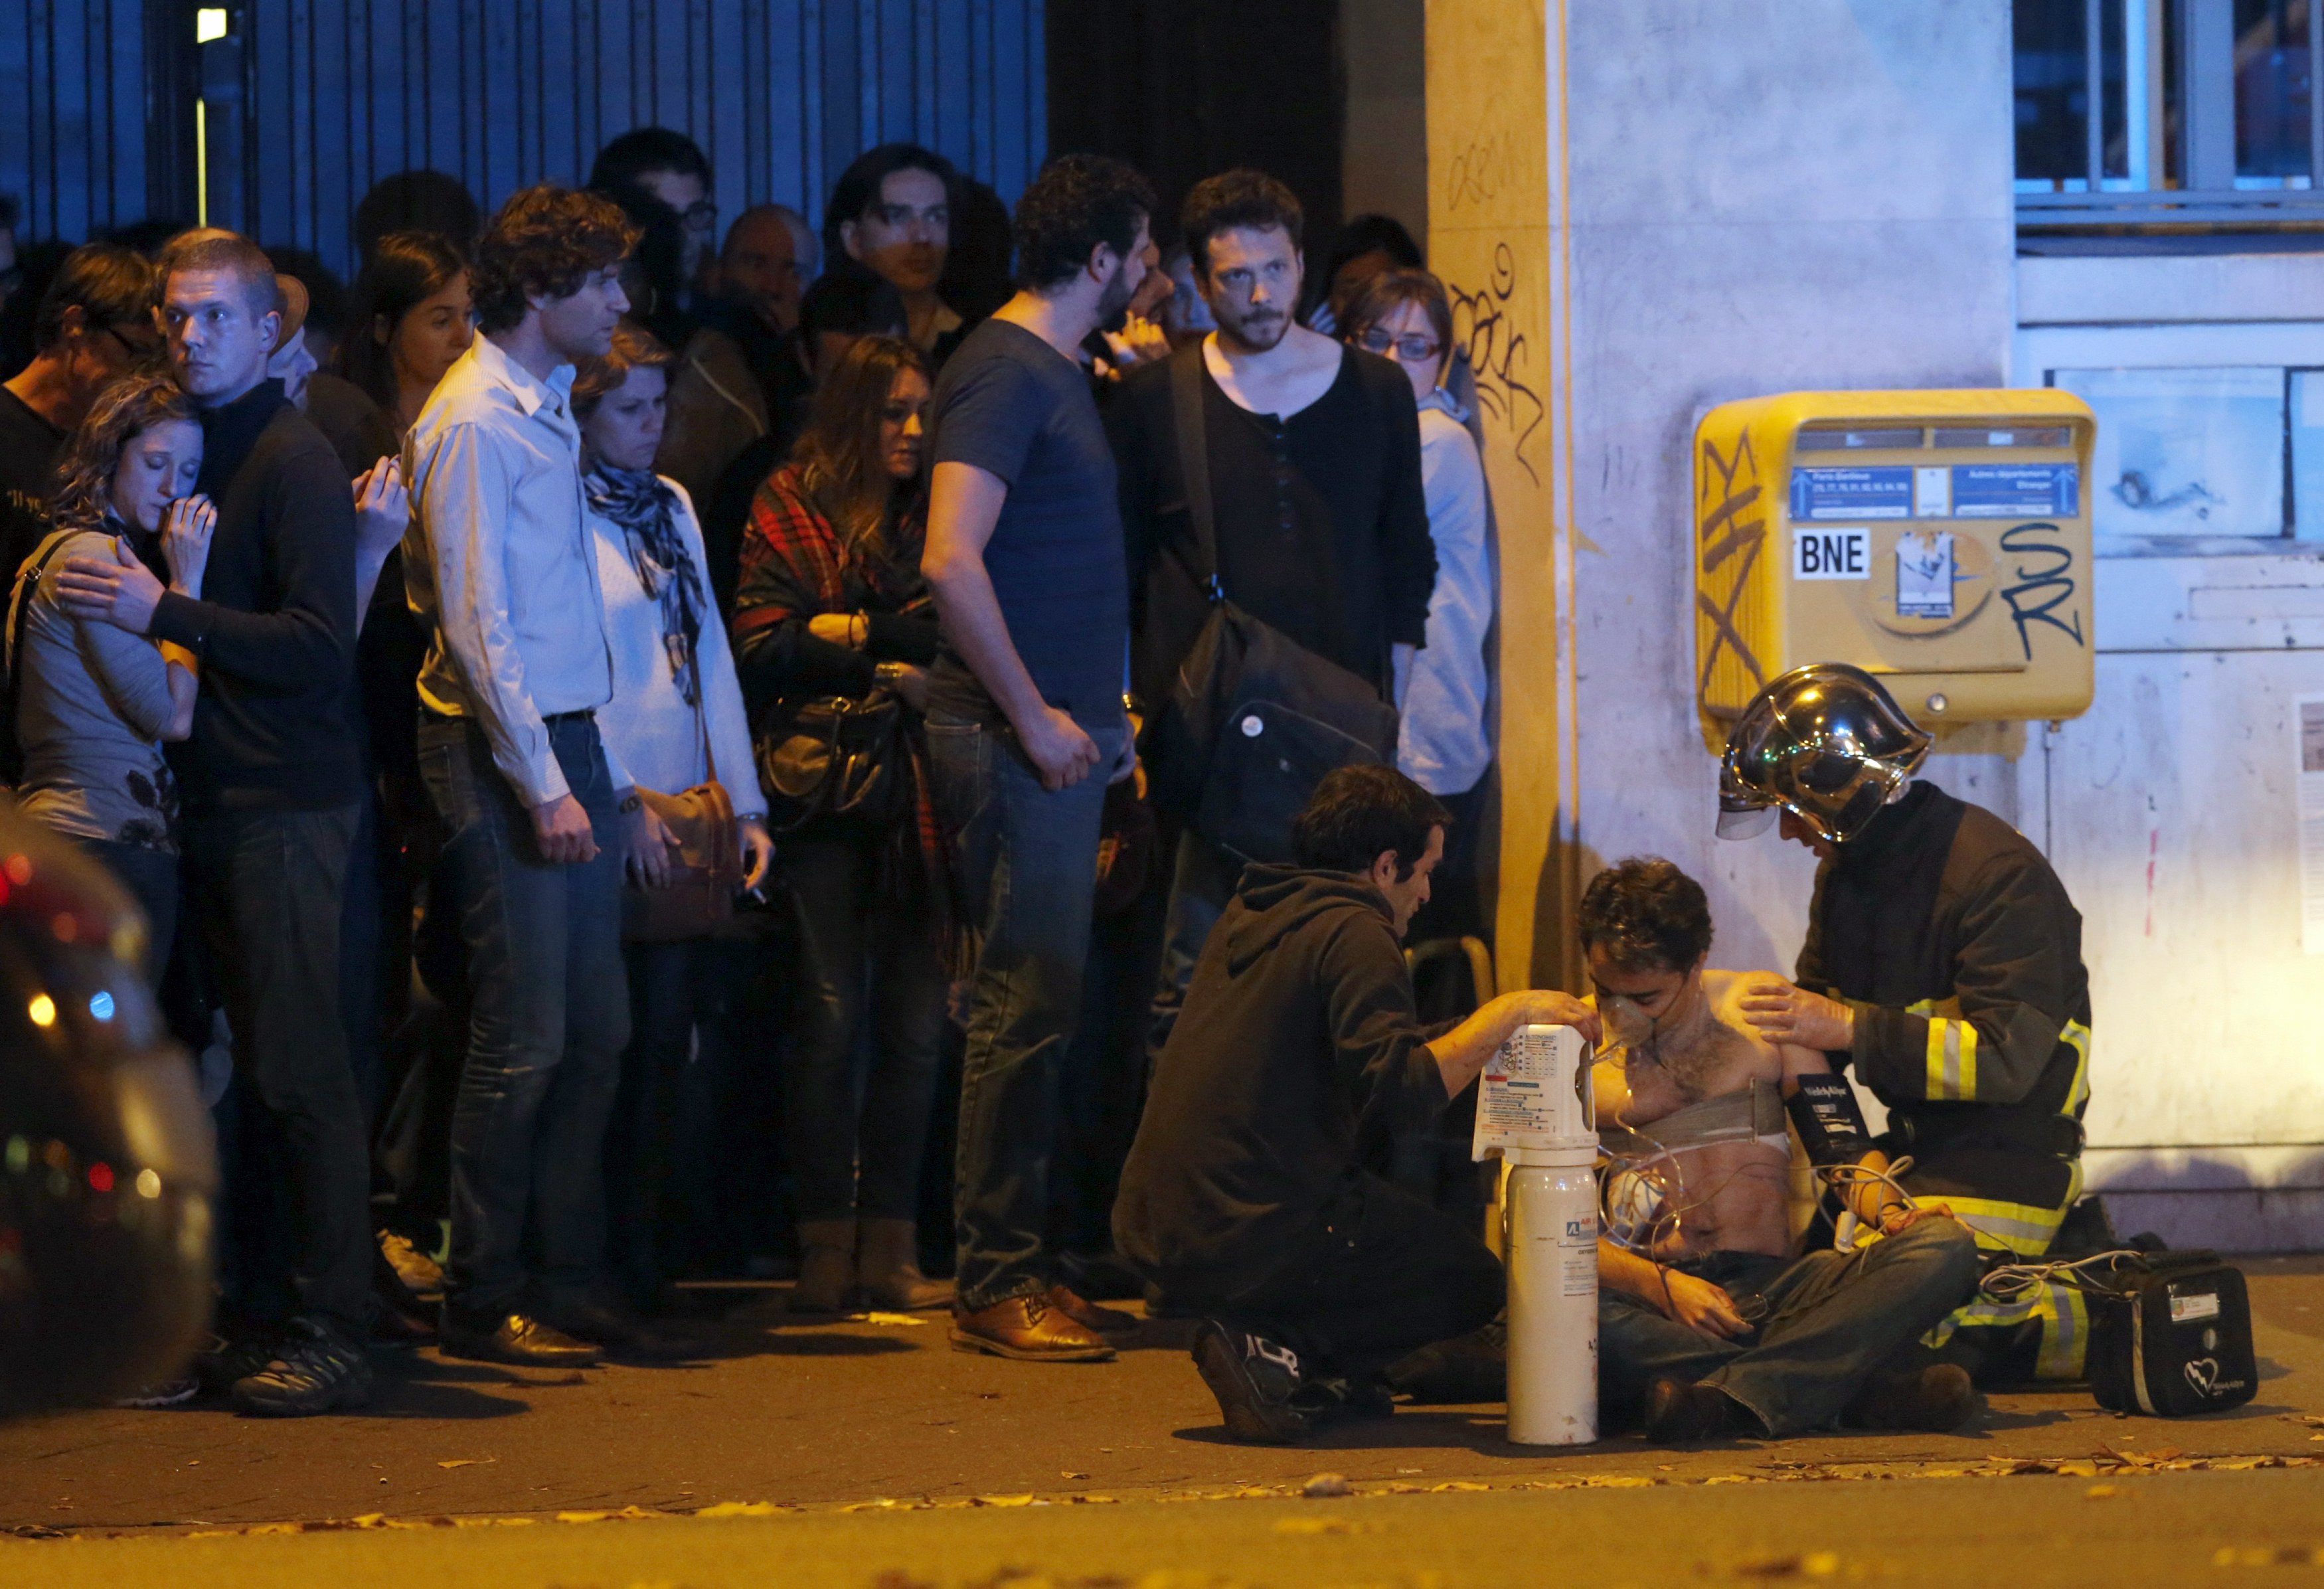 Нападение на концертный зал. 13 Ноября 2015 Франция теракт Bataclan. Театр Батаклан Париж теракт. Теракт в Париже 2015 в концертном зале Батаклан.